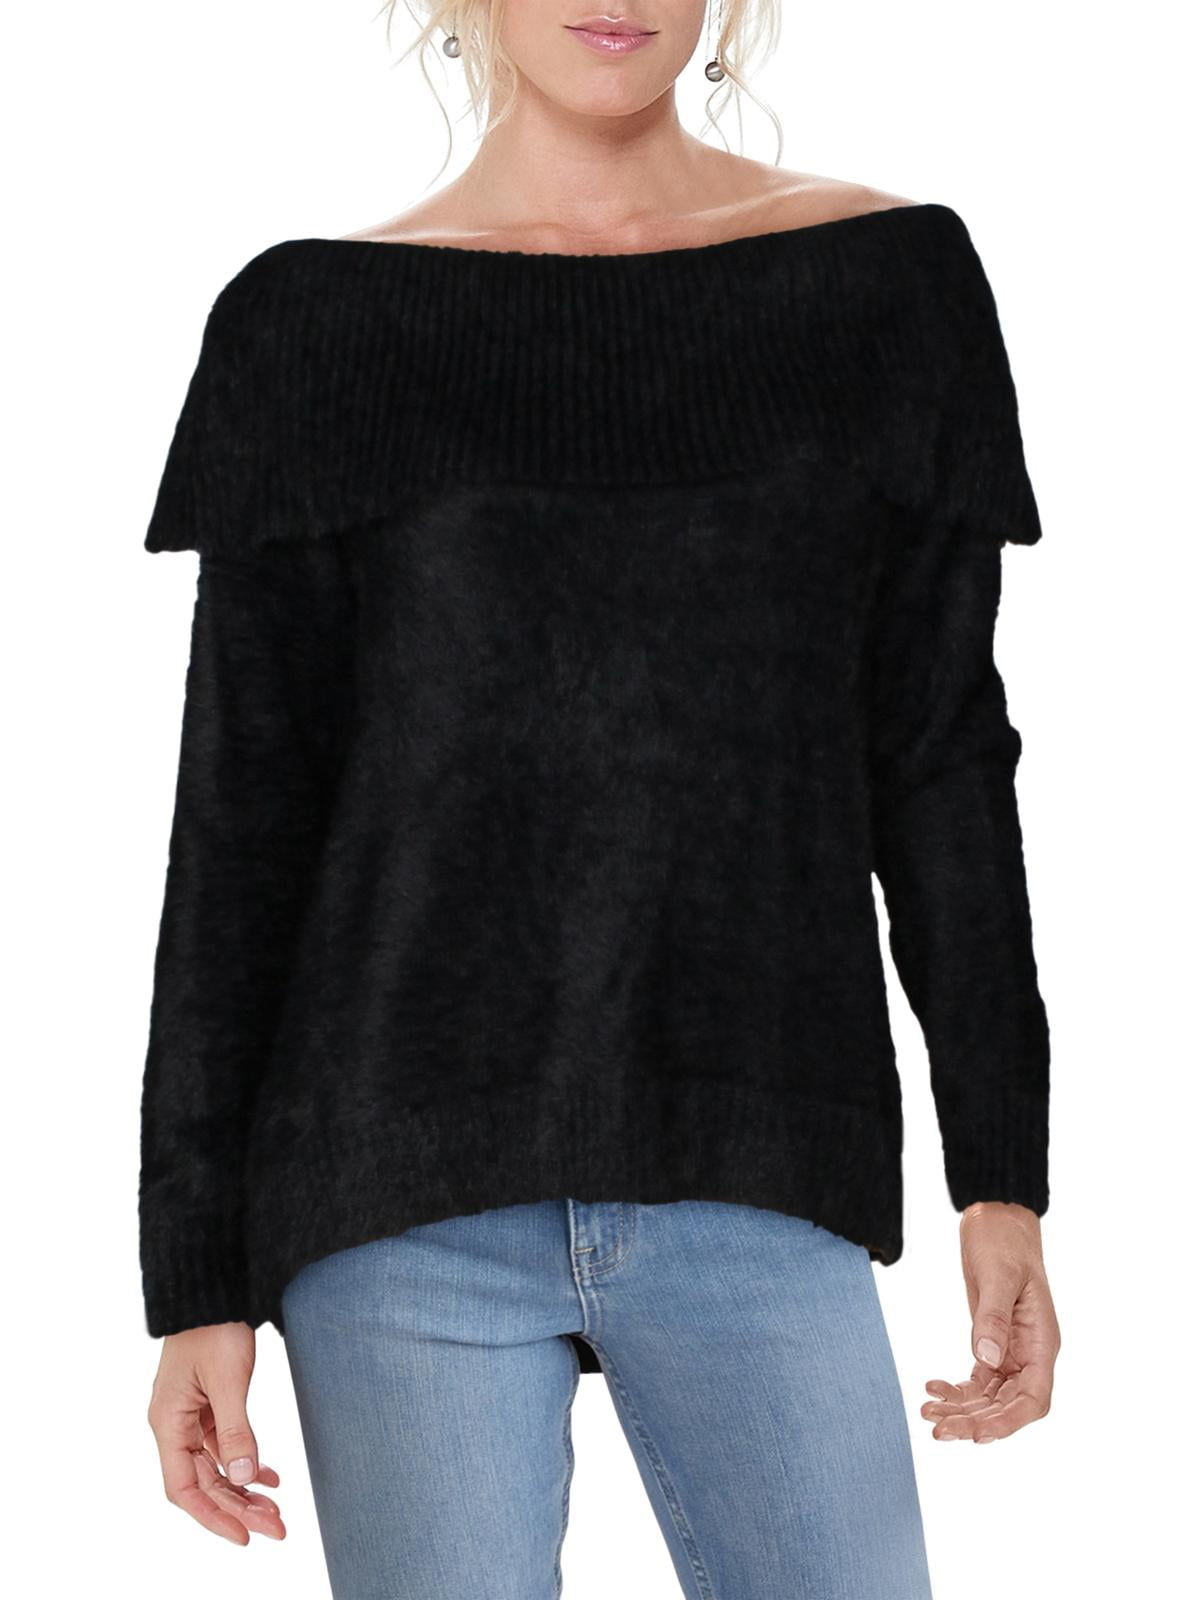 Kensie Womens Cowl Neck Ribbed Trim Sweater Black M - Walmart.com